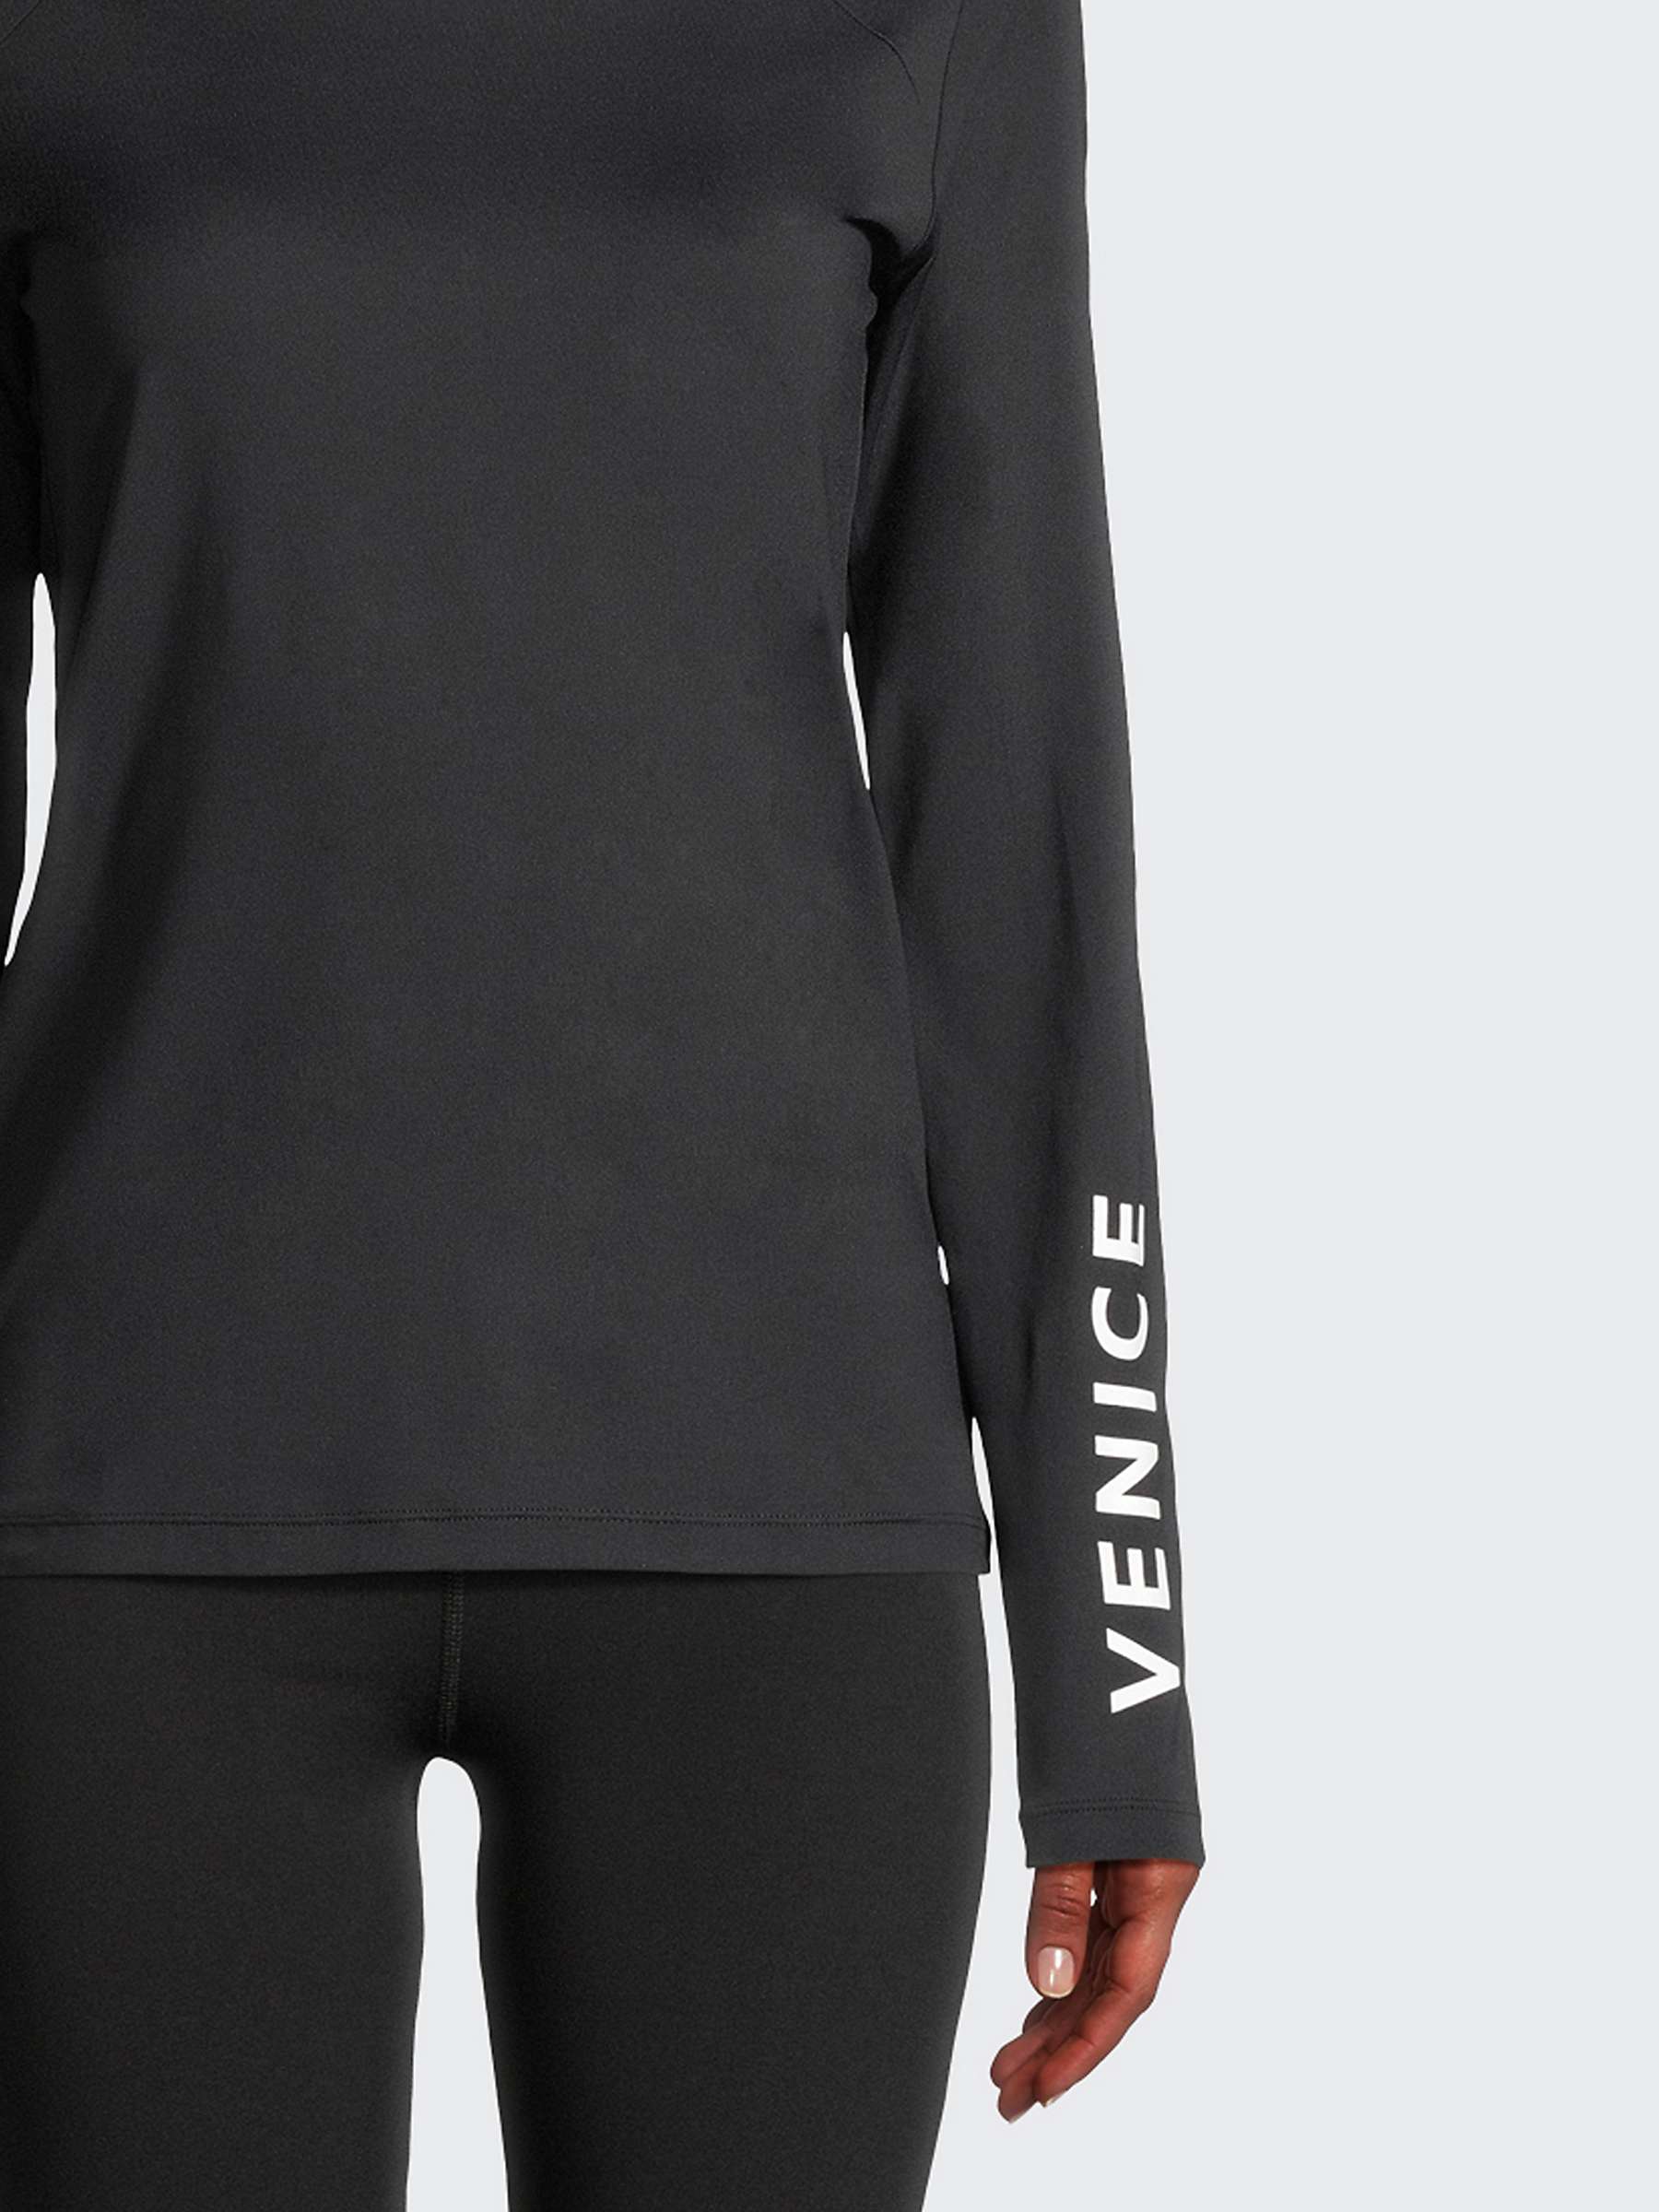 Buy Venice Beach Leana Long Sleeve Top, Black Online at johnlewis.com